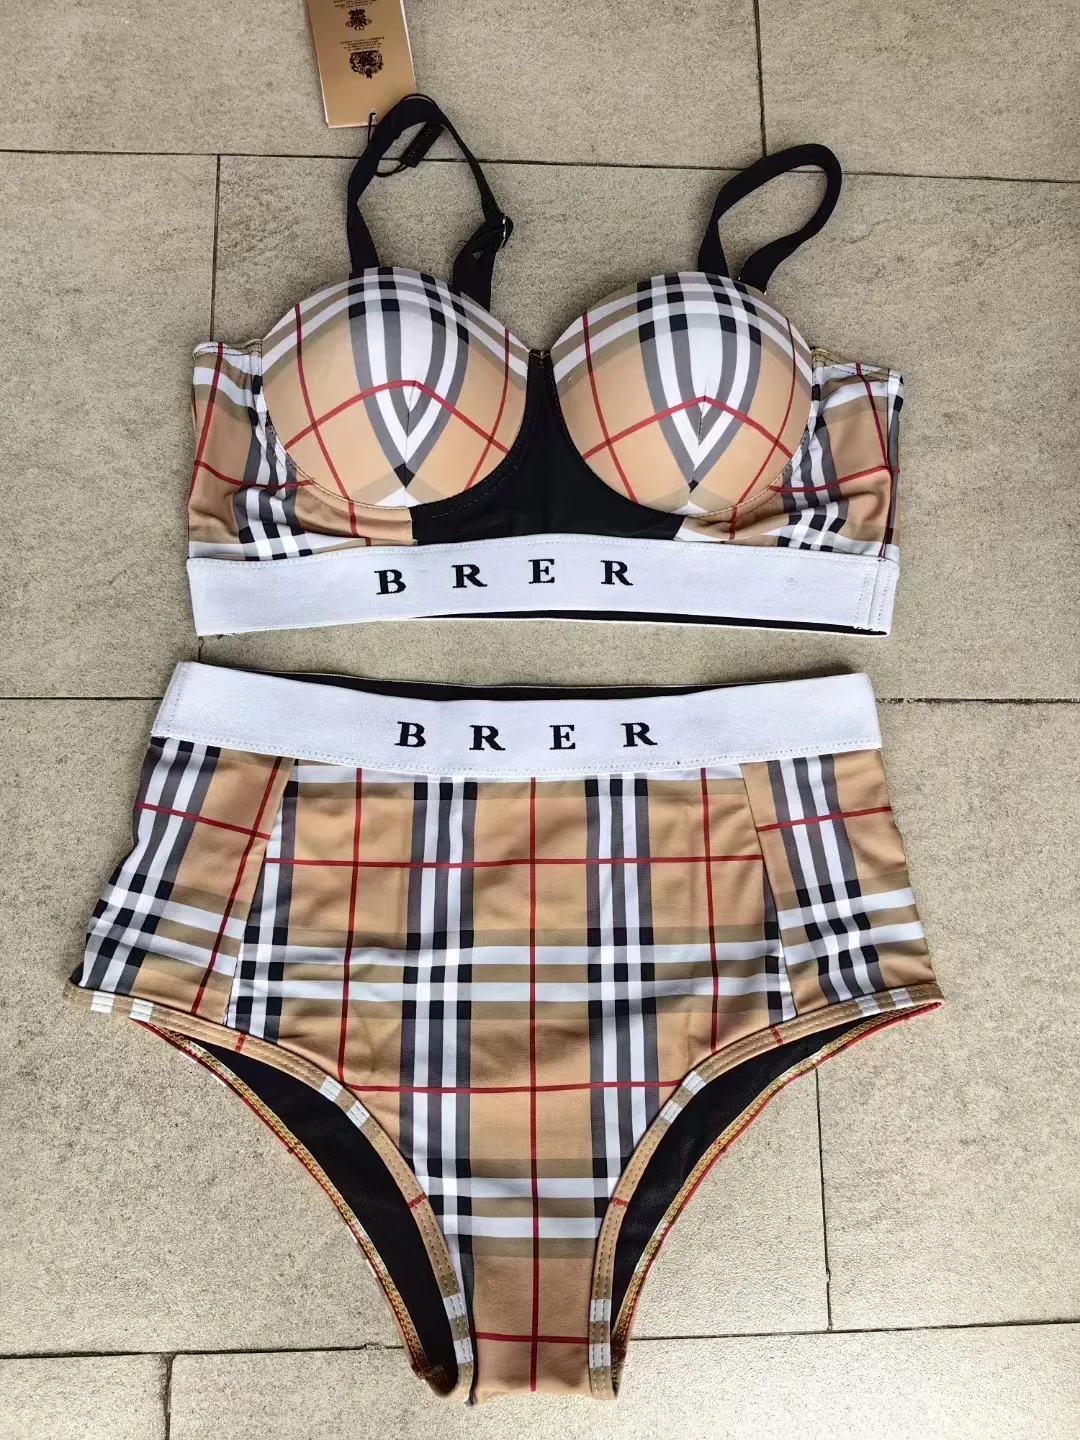 Women's Plus Size Underwear Women Swimwear Push Up Bikinis Bandage Bikini Sets Swimsuit Sexy Beachwear Bathing Suit